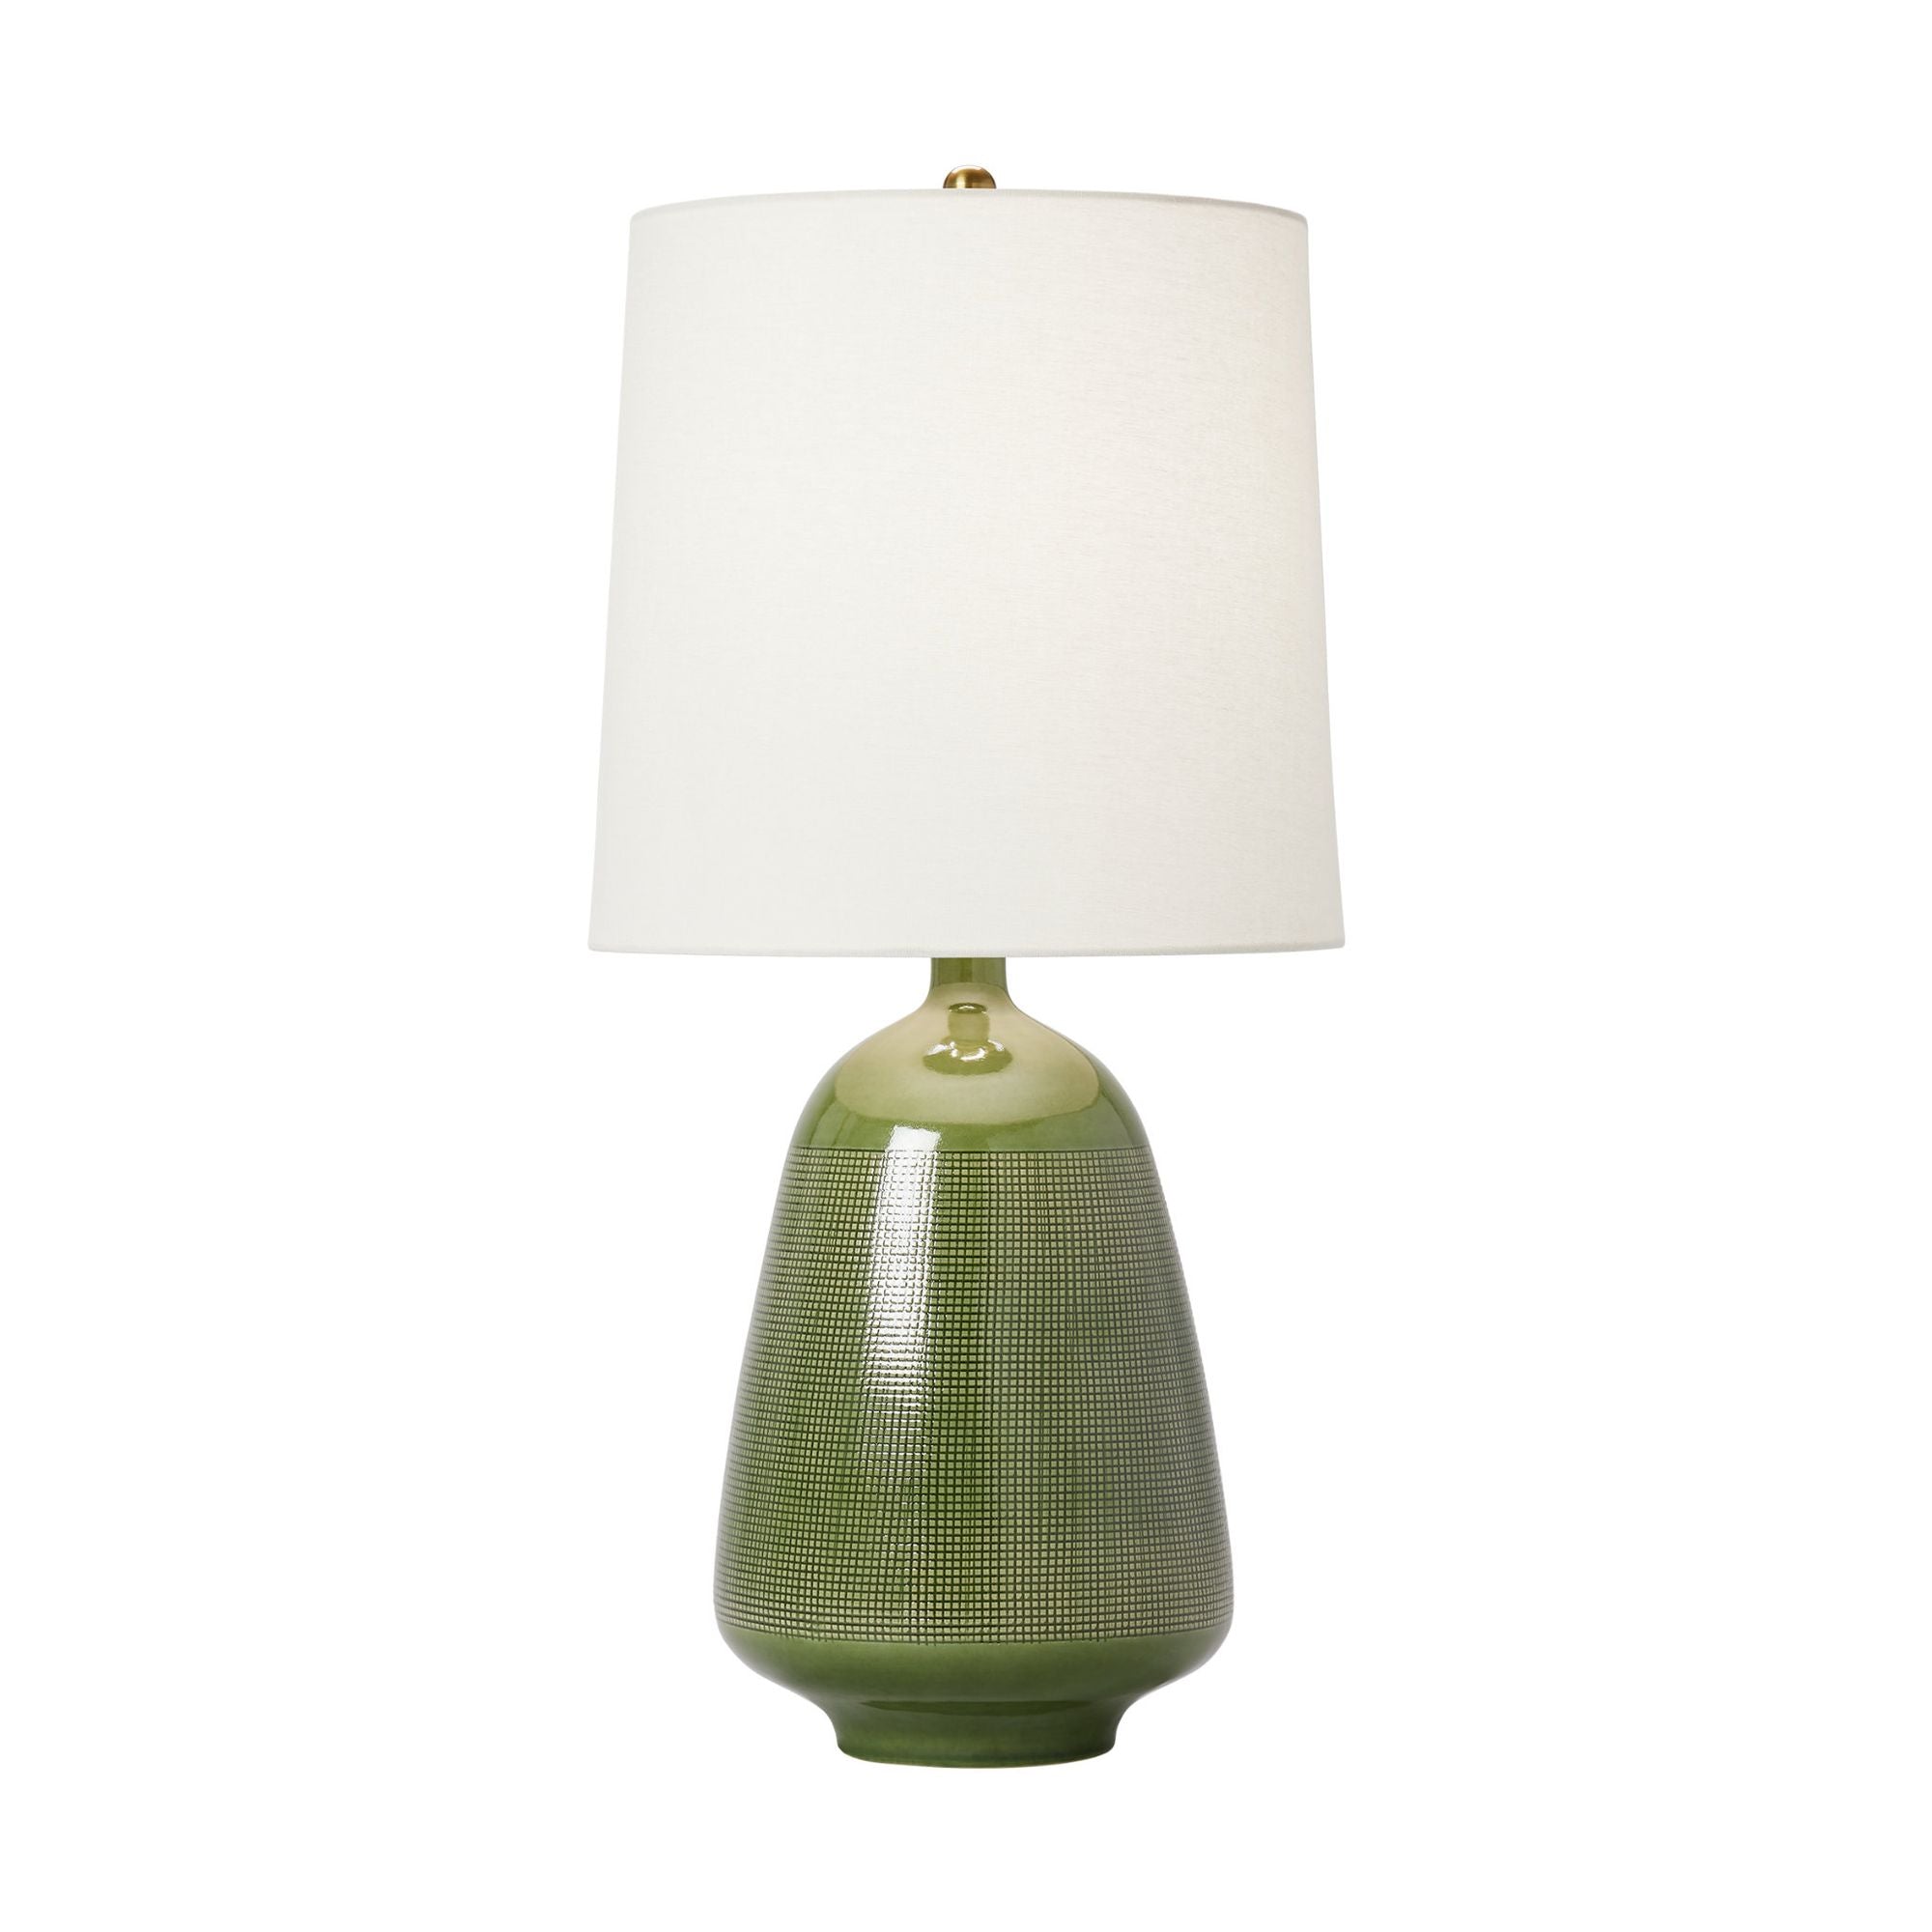 AERIN Ornella Medium Table Lamp in Green